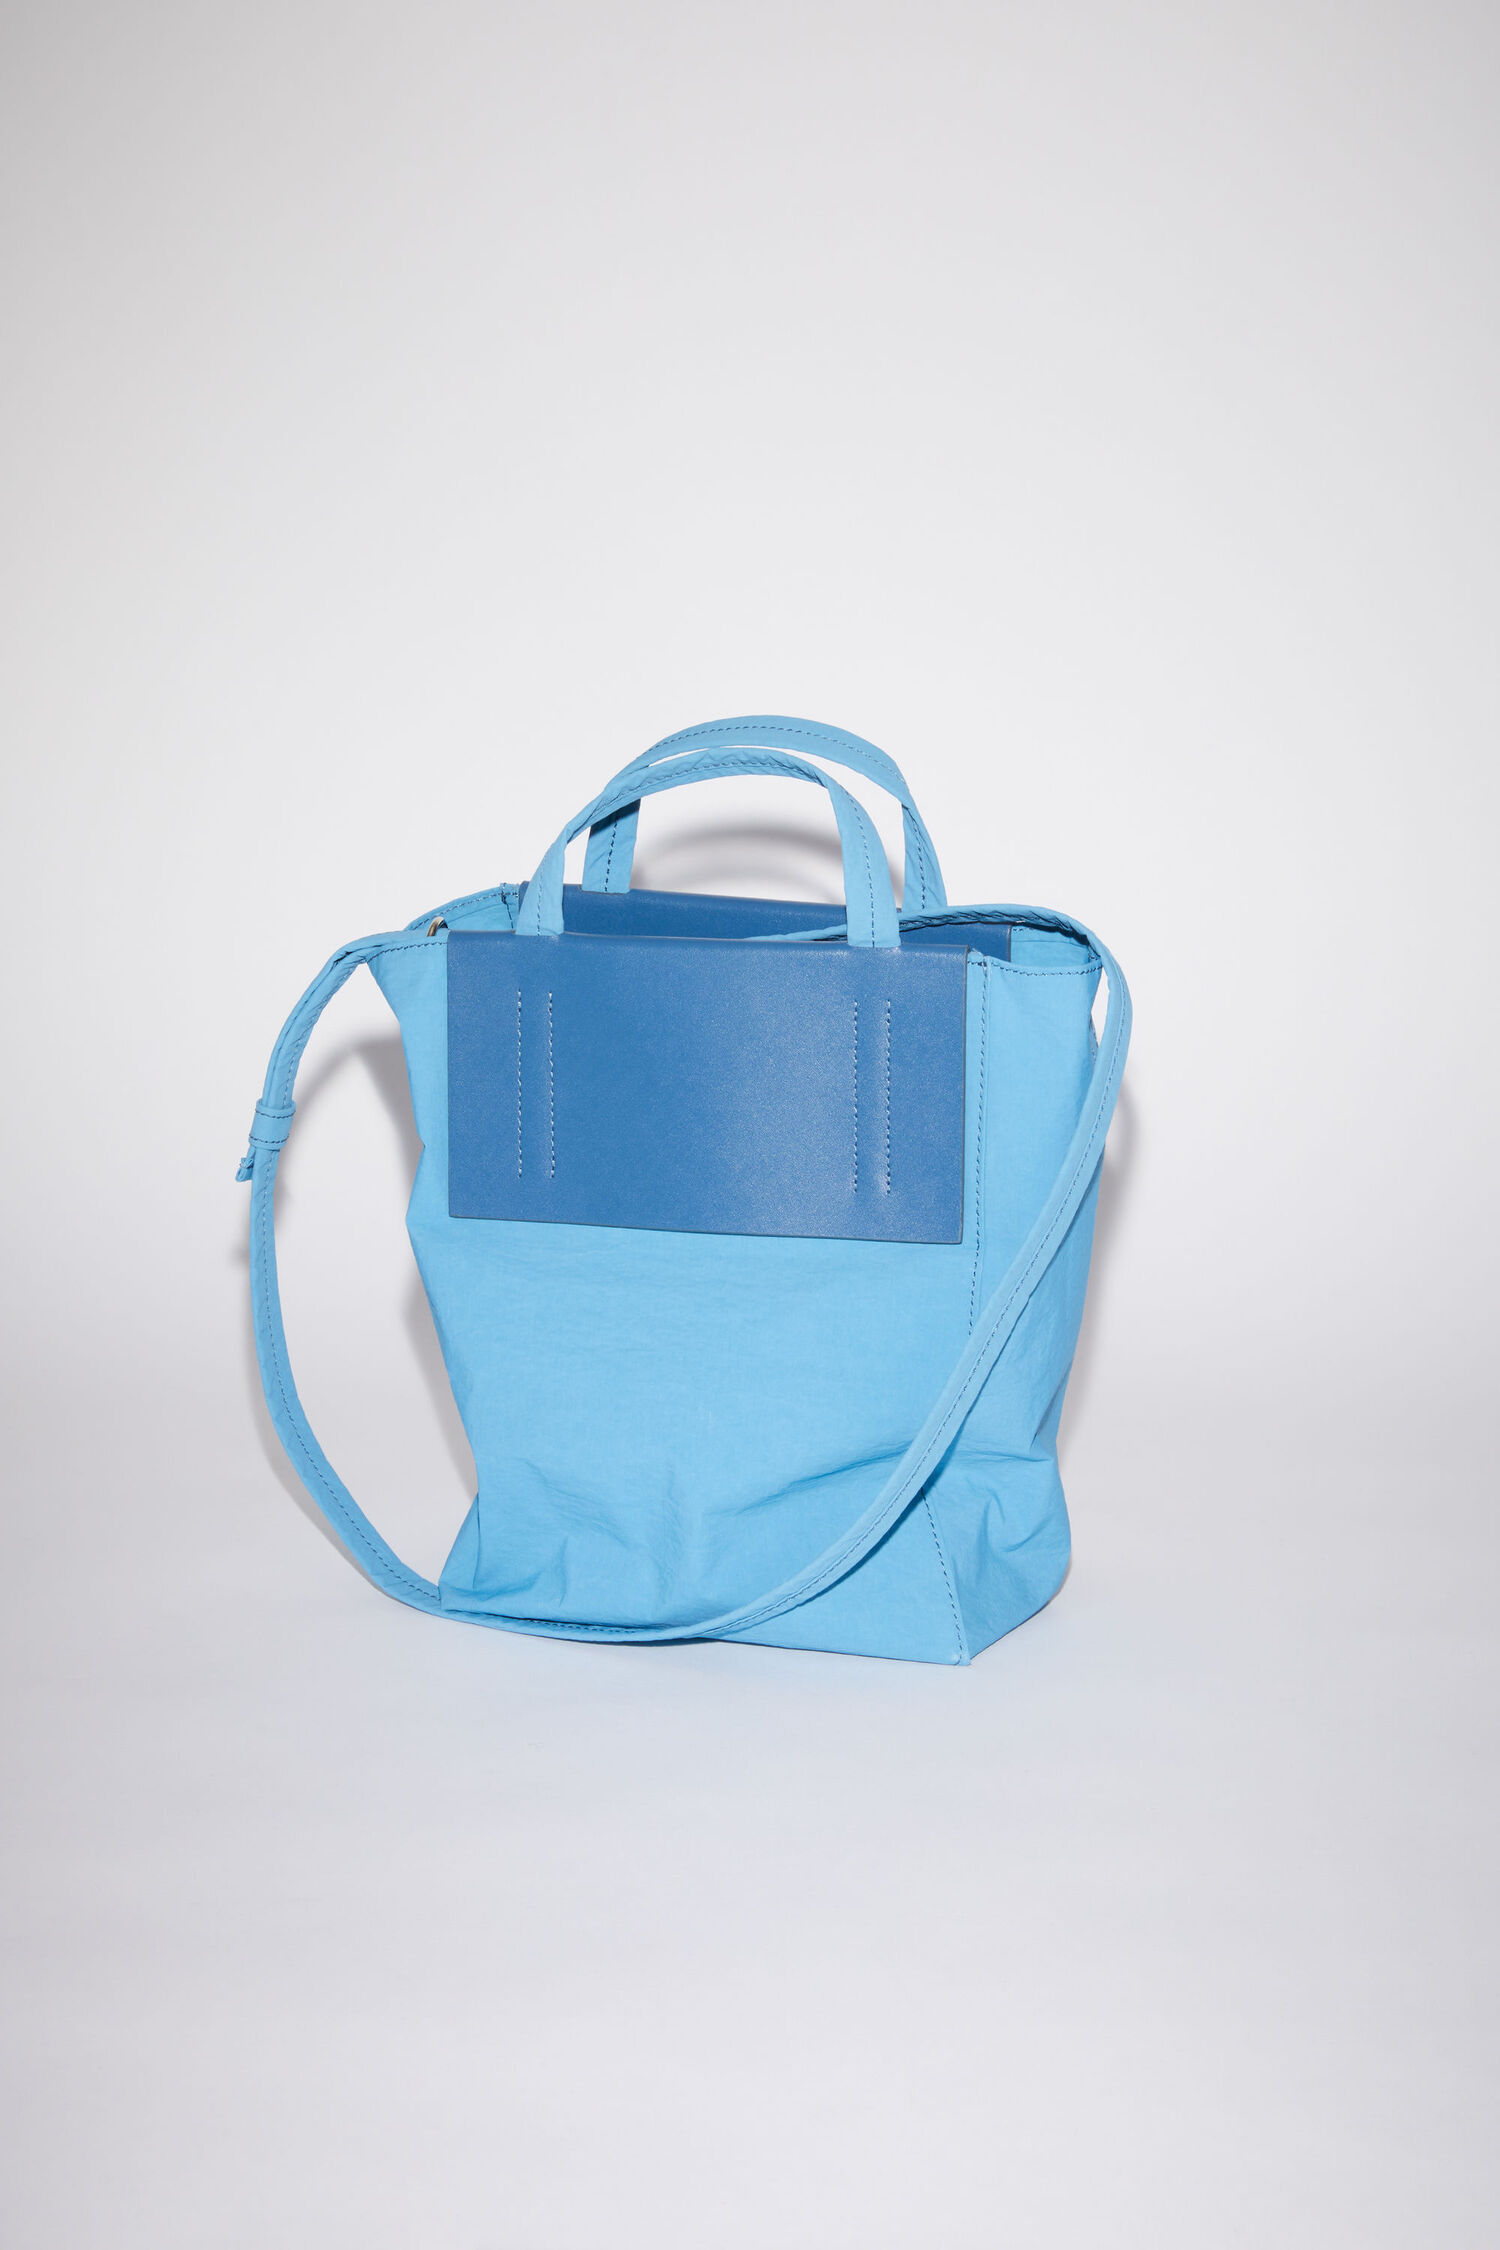 Acne Studios - Papery Nylon tote bag - Powder blue/blue